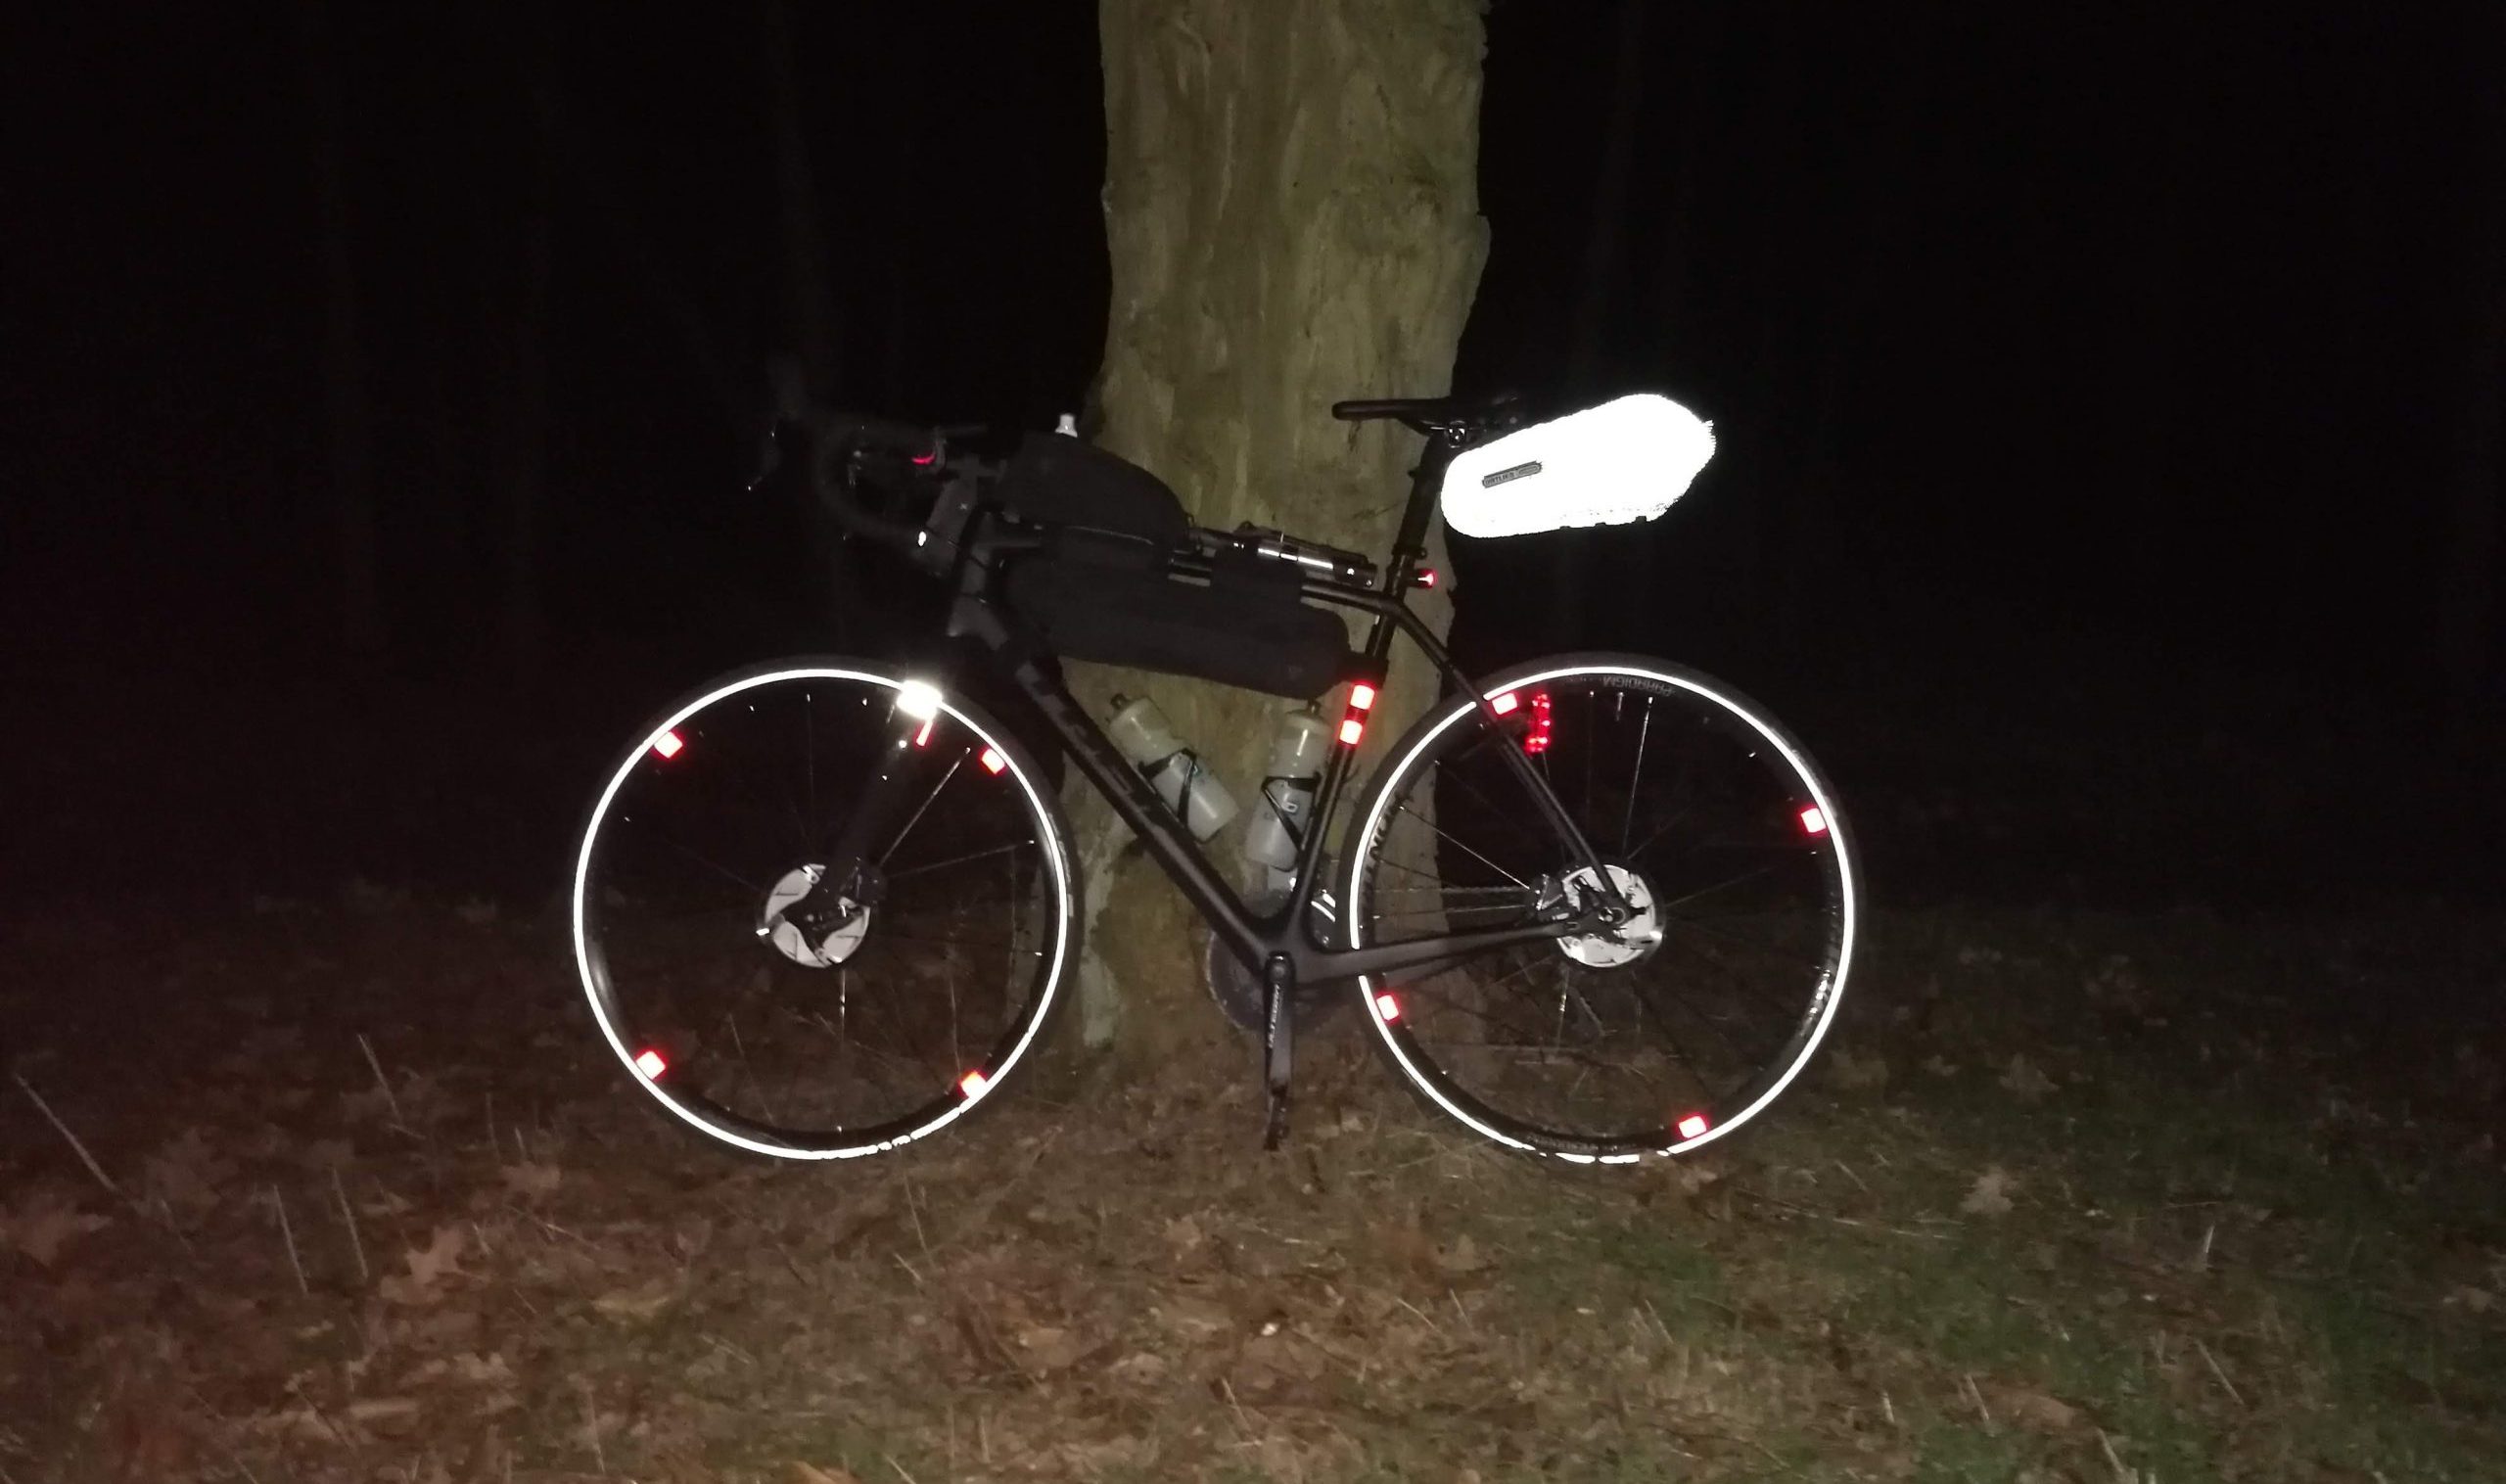 Fahrrad-Hacks mit Rainer #1: DIY Fahrrad Reflektoren